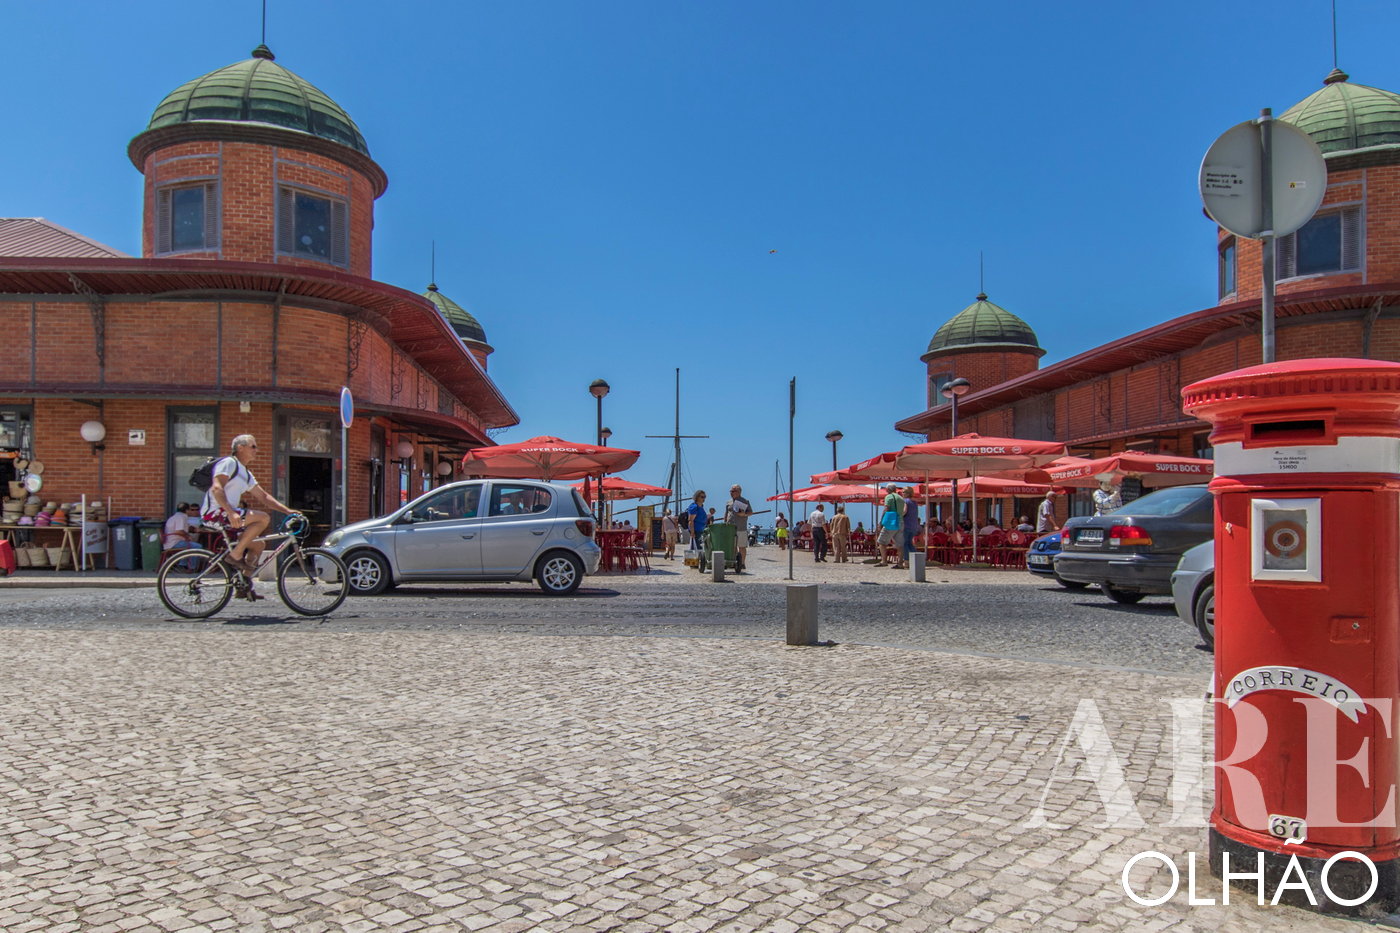 Historic Dual Markets of Olhão